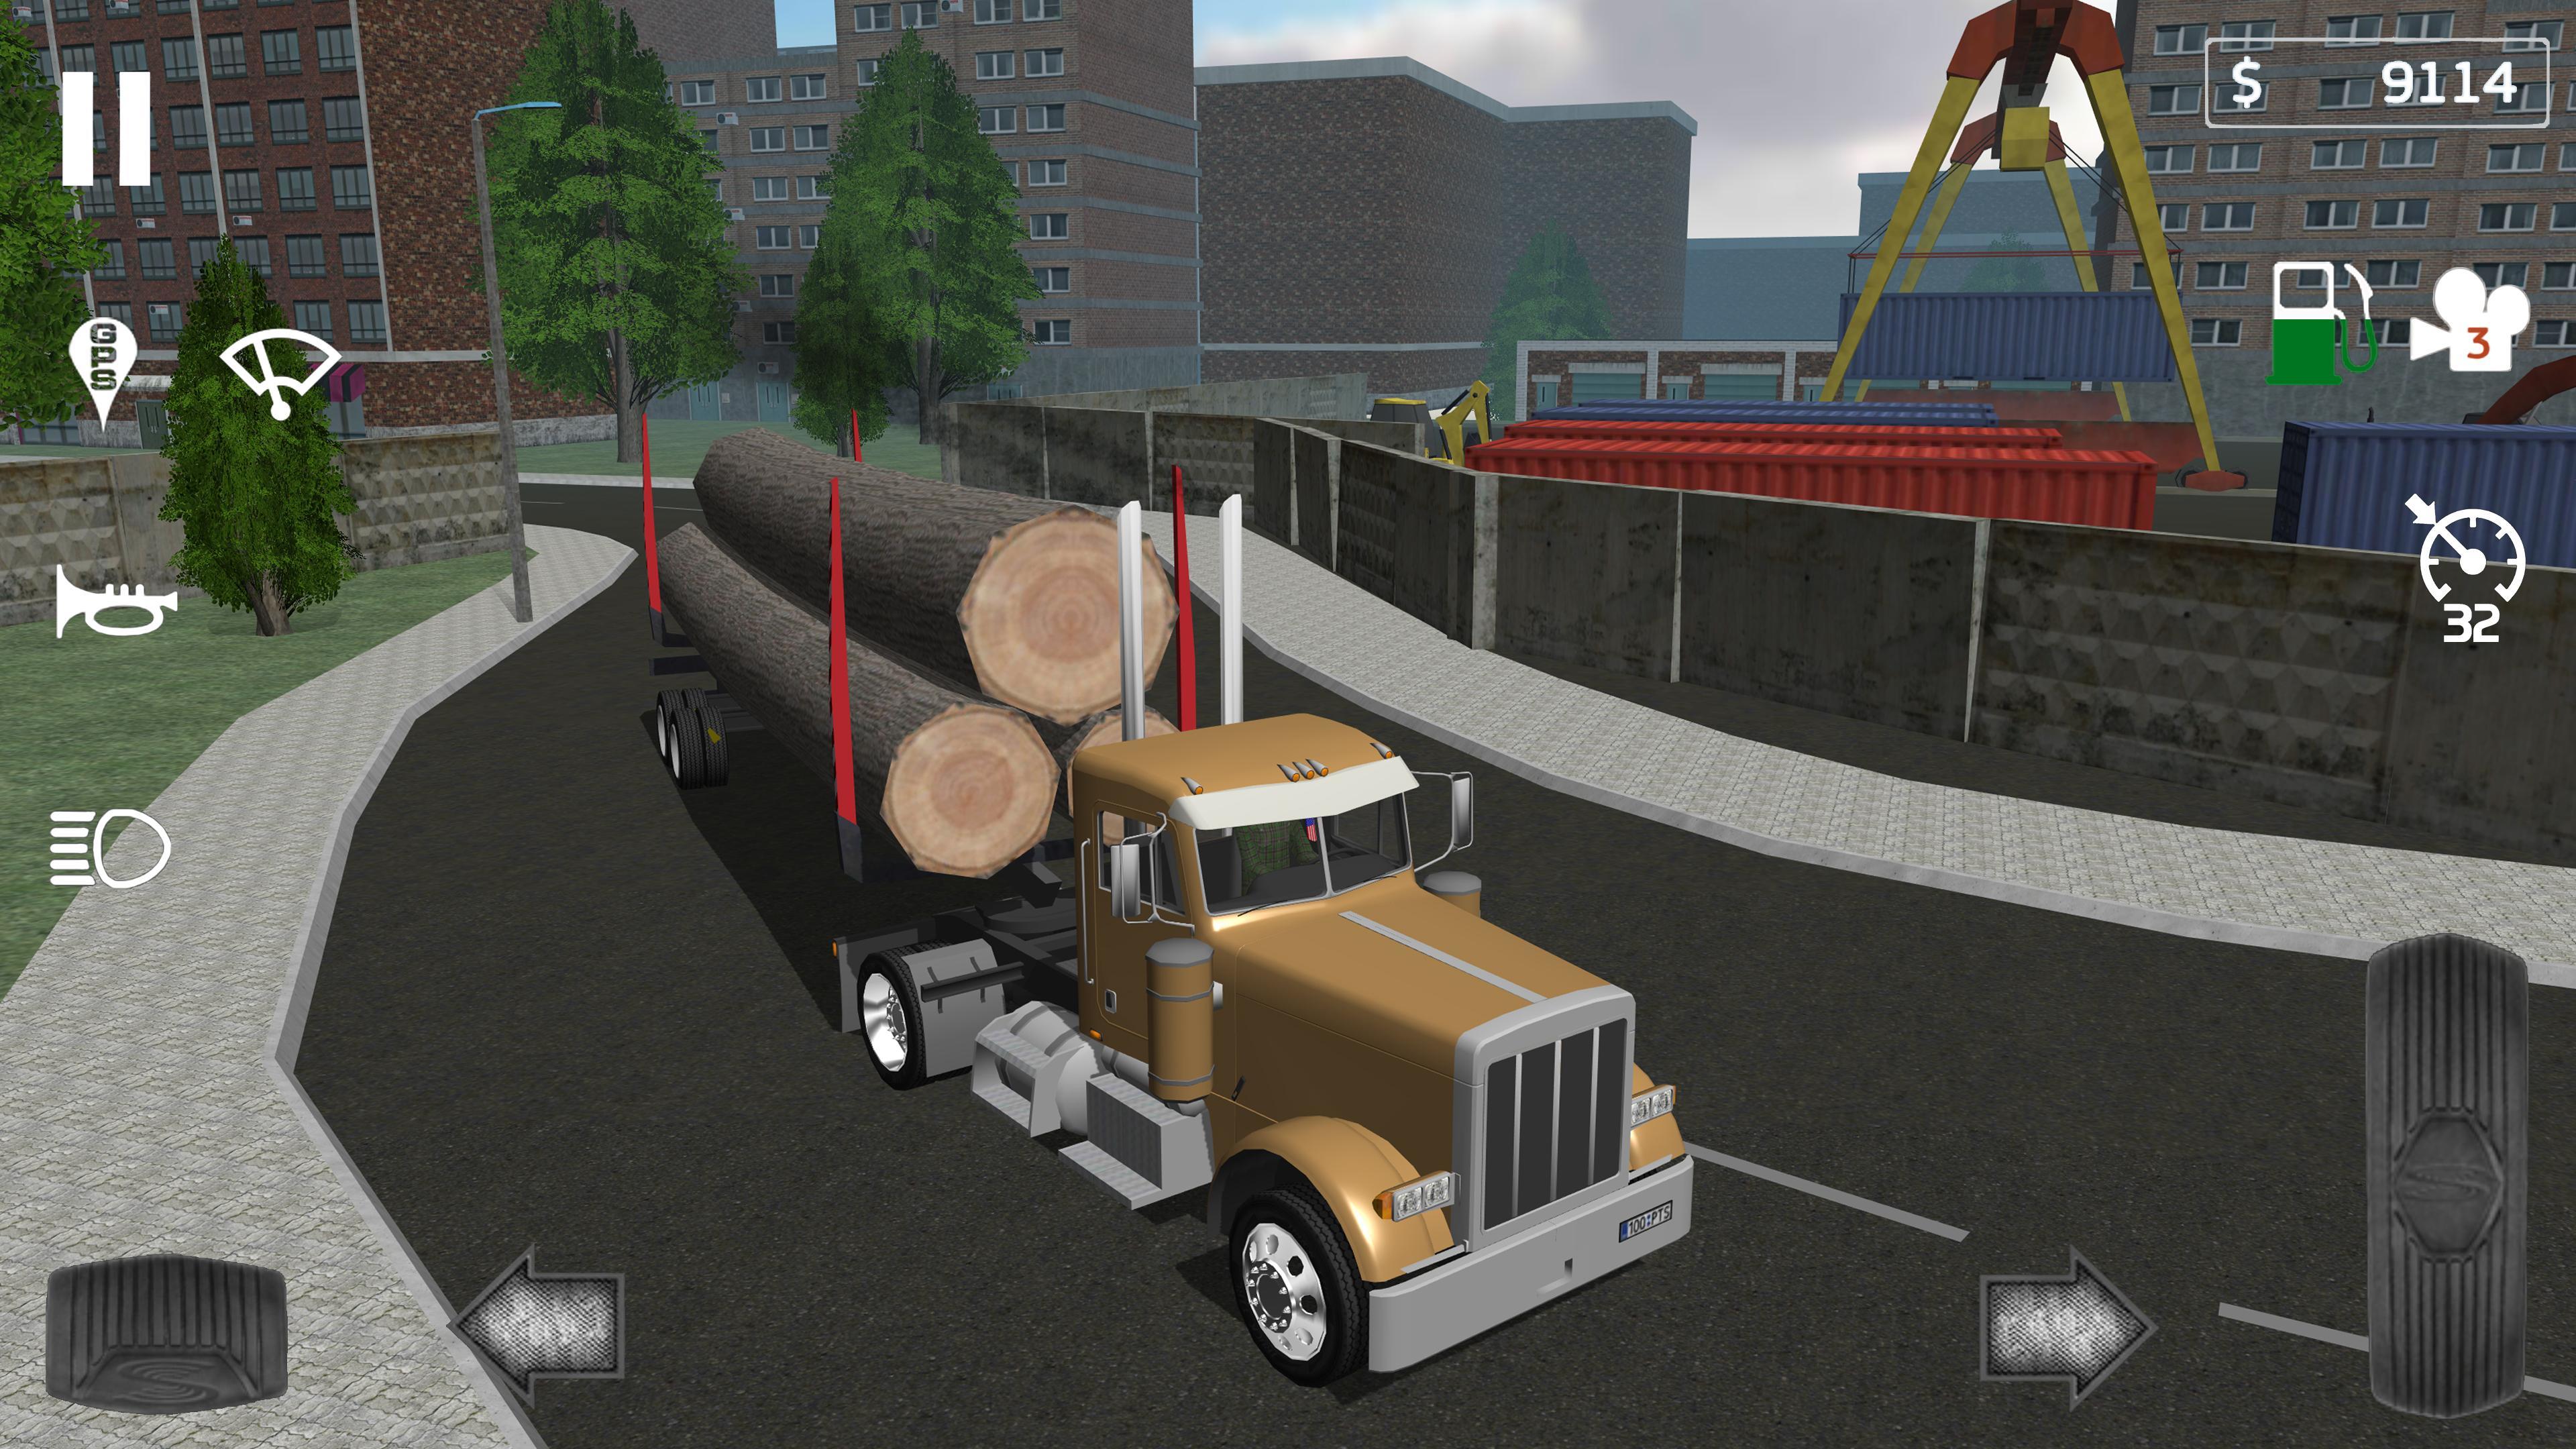 Cargo Transport Simulator para Android - Download